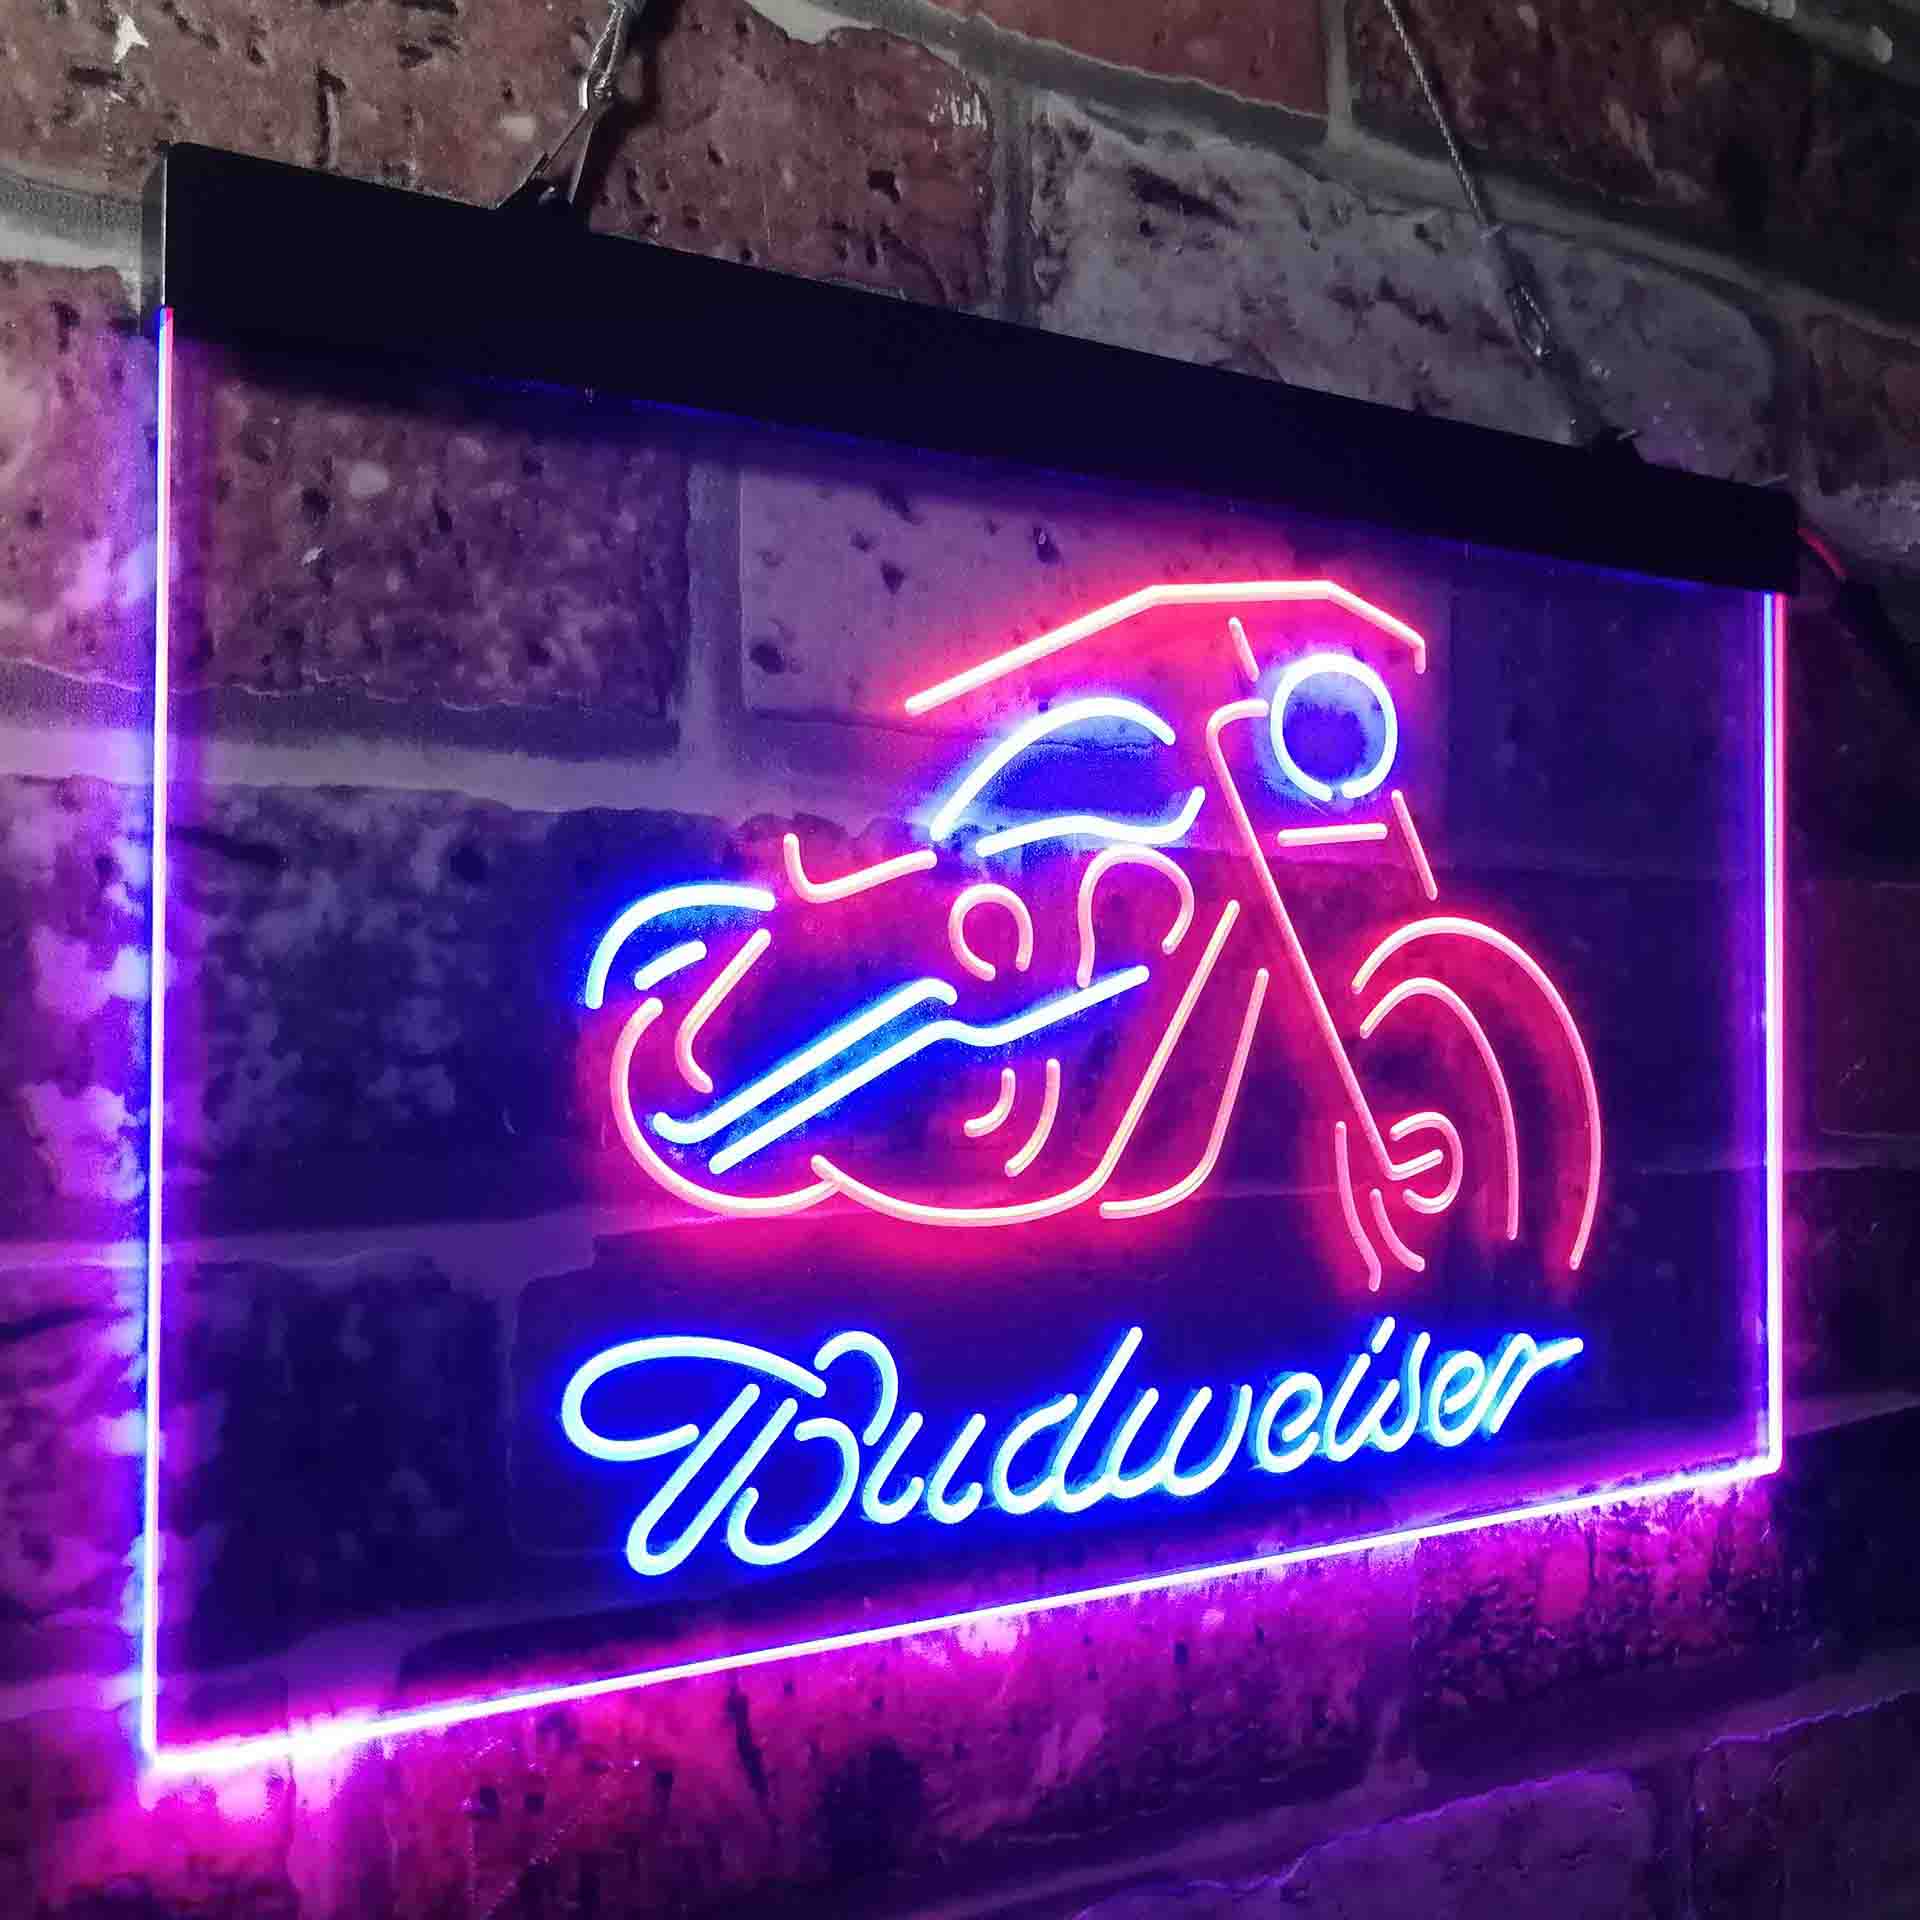 Budweiser Motorcycle Garage Neon-Like LED Sign